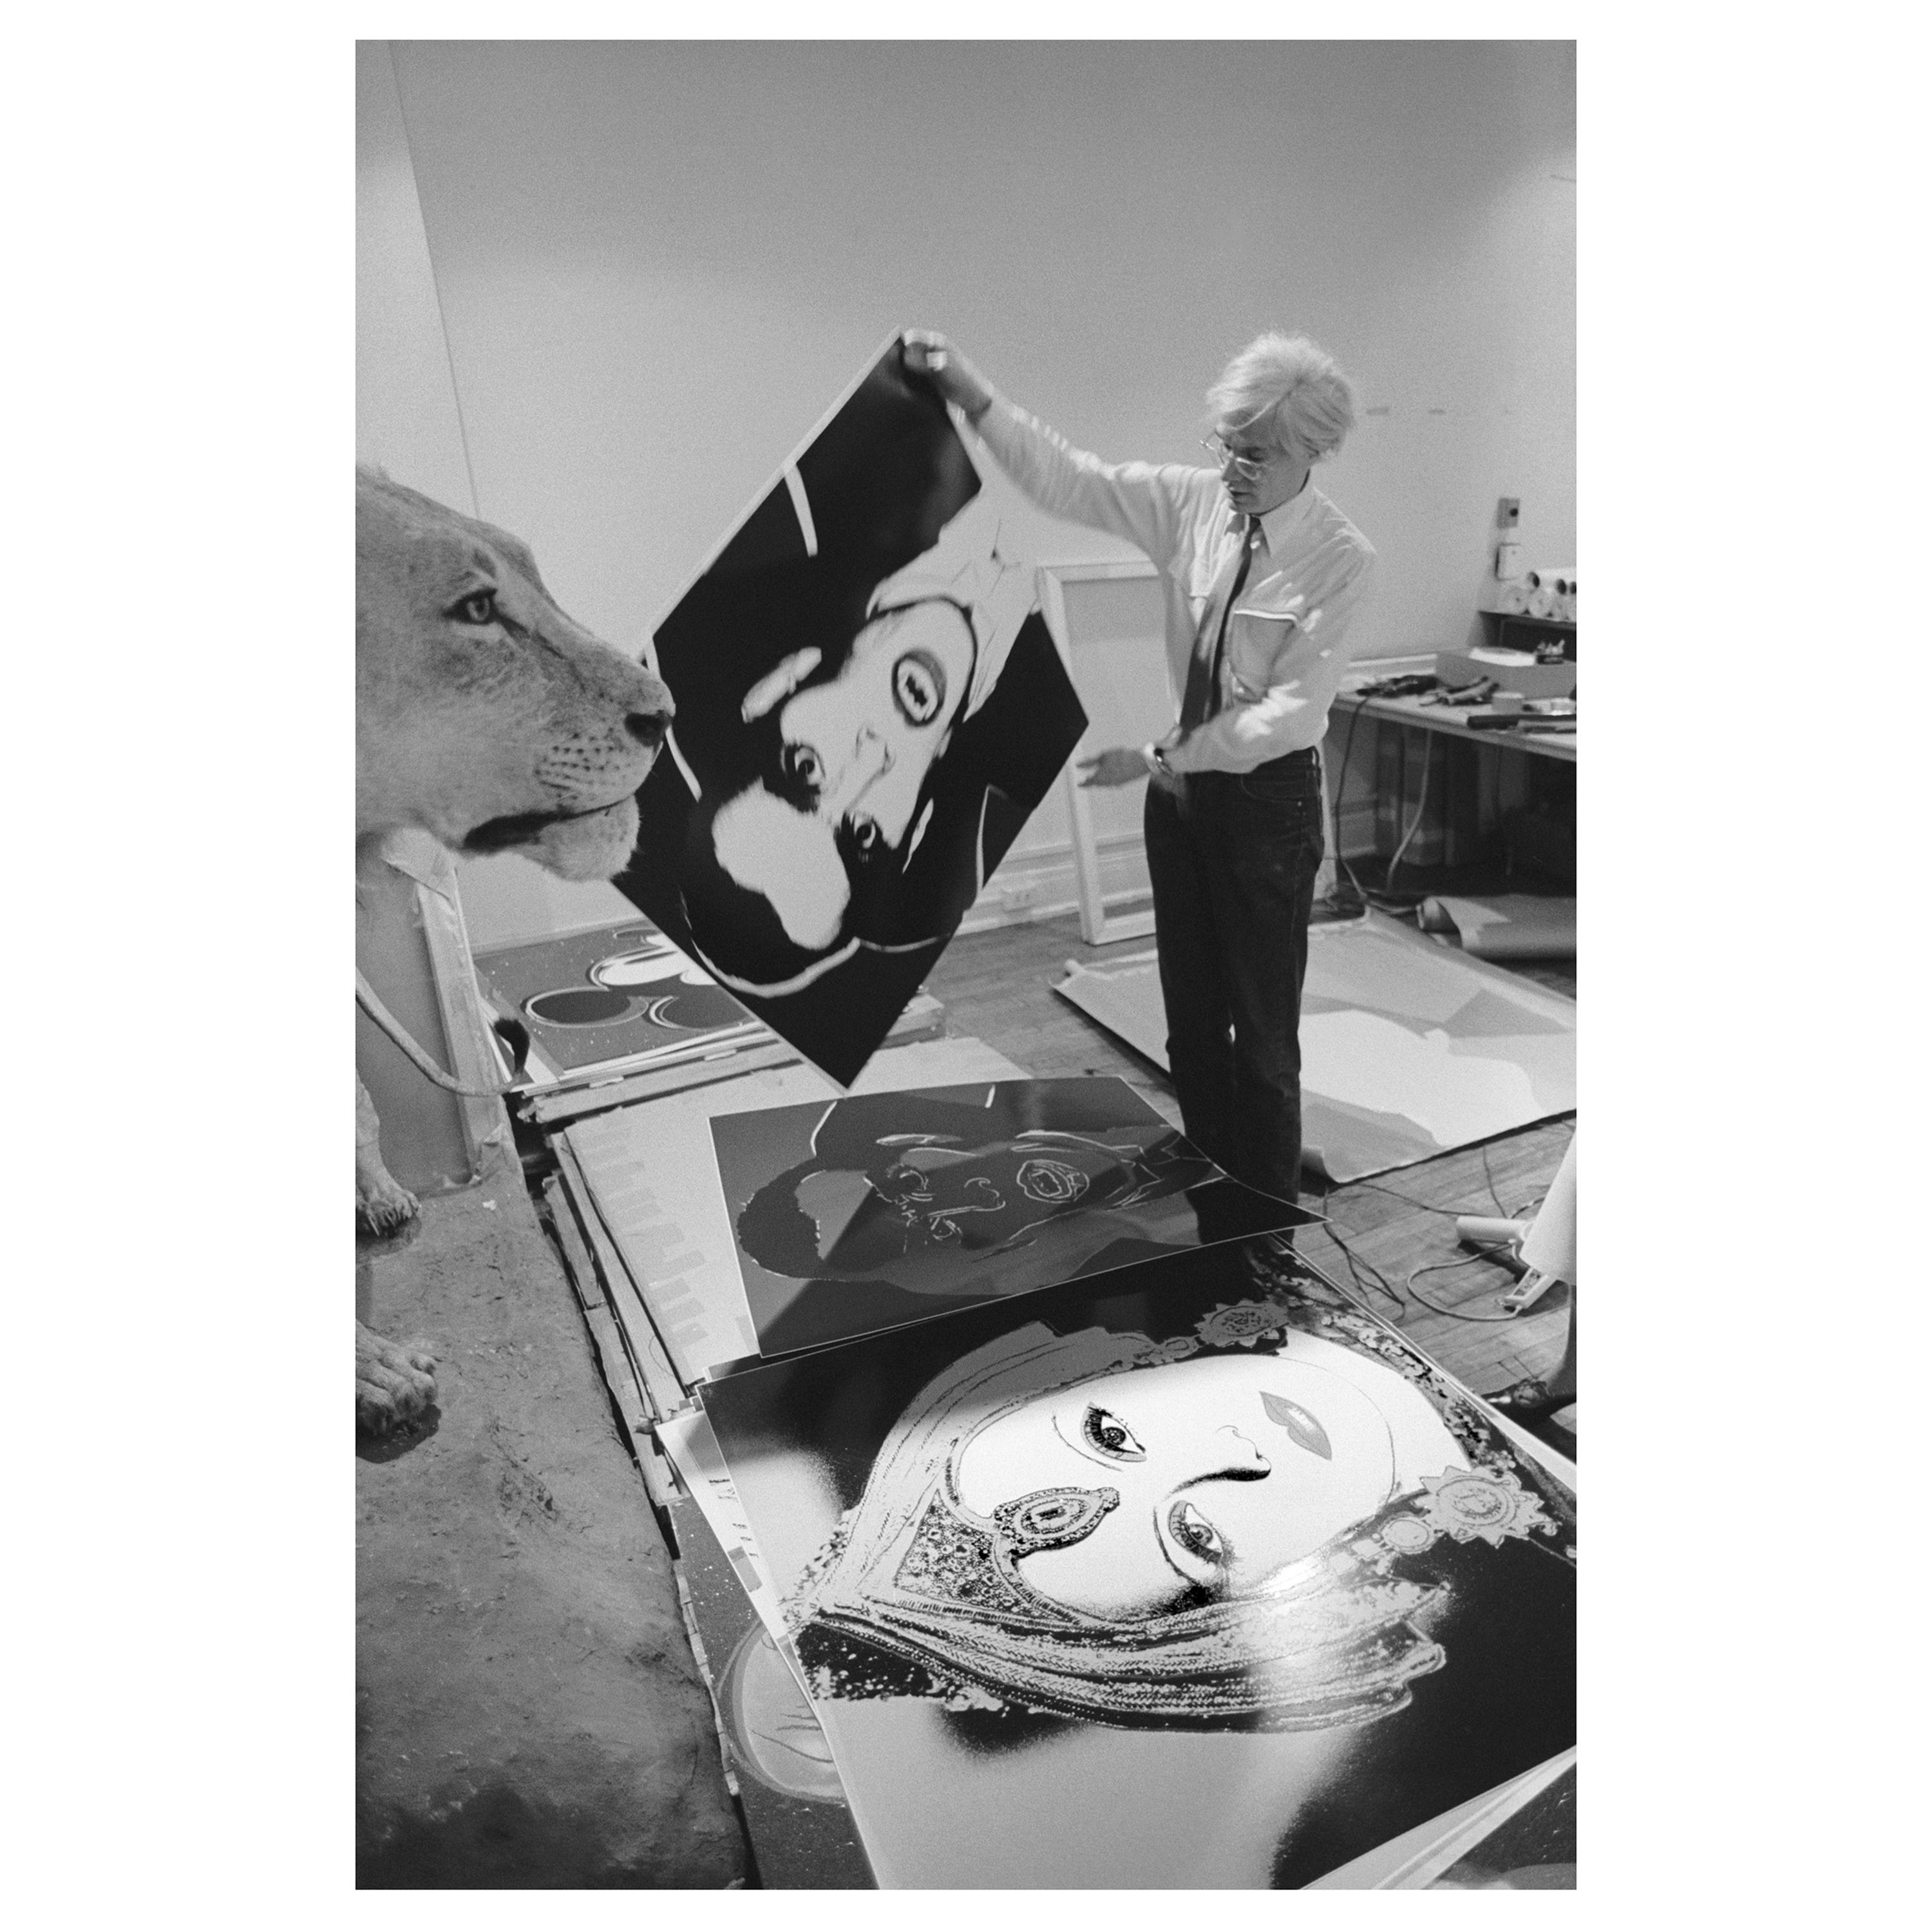 Robert Levin, "Andy Warhol Holding Dracula Myth, 1981" Framed Print, USA, 2015